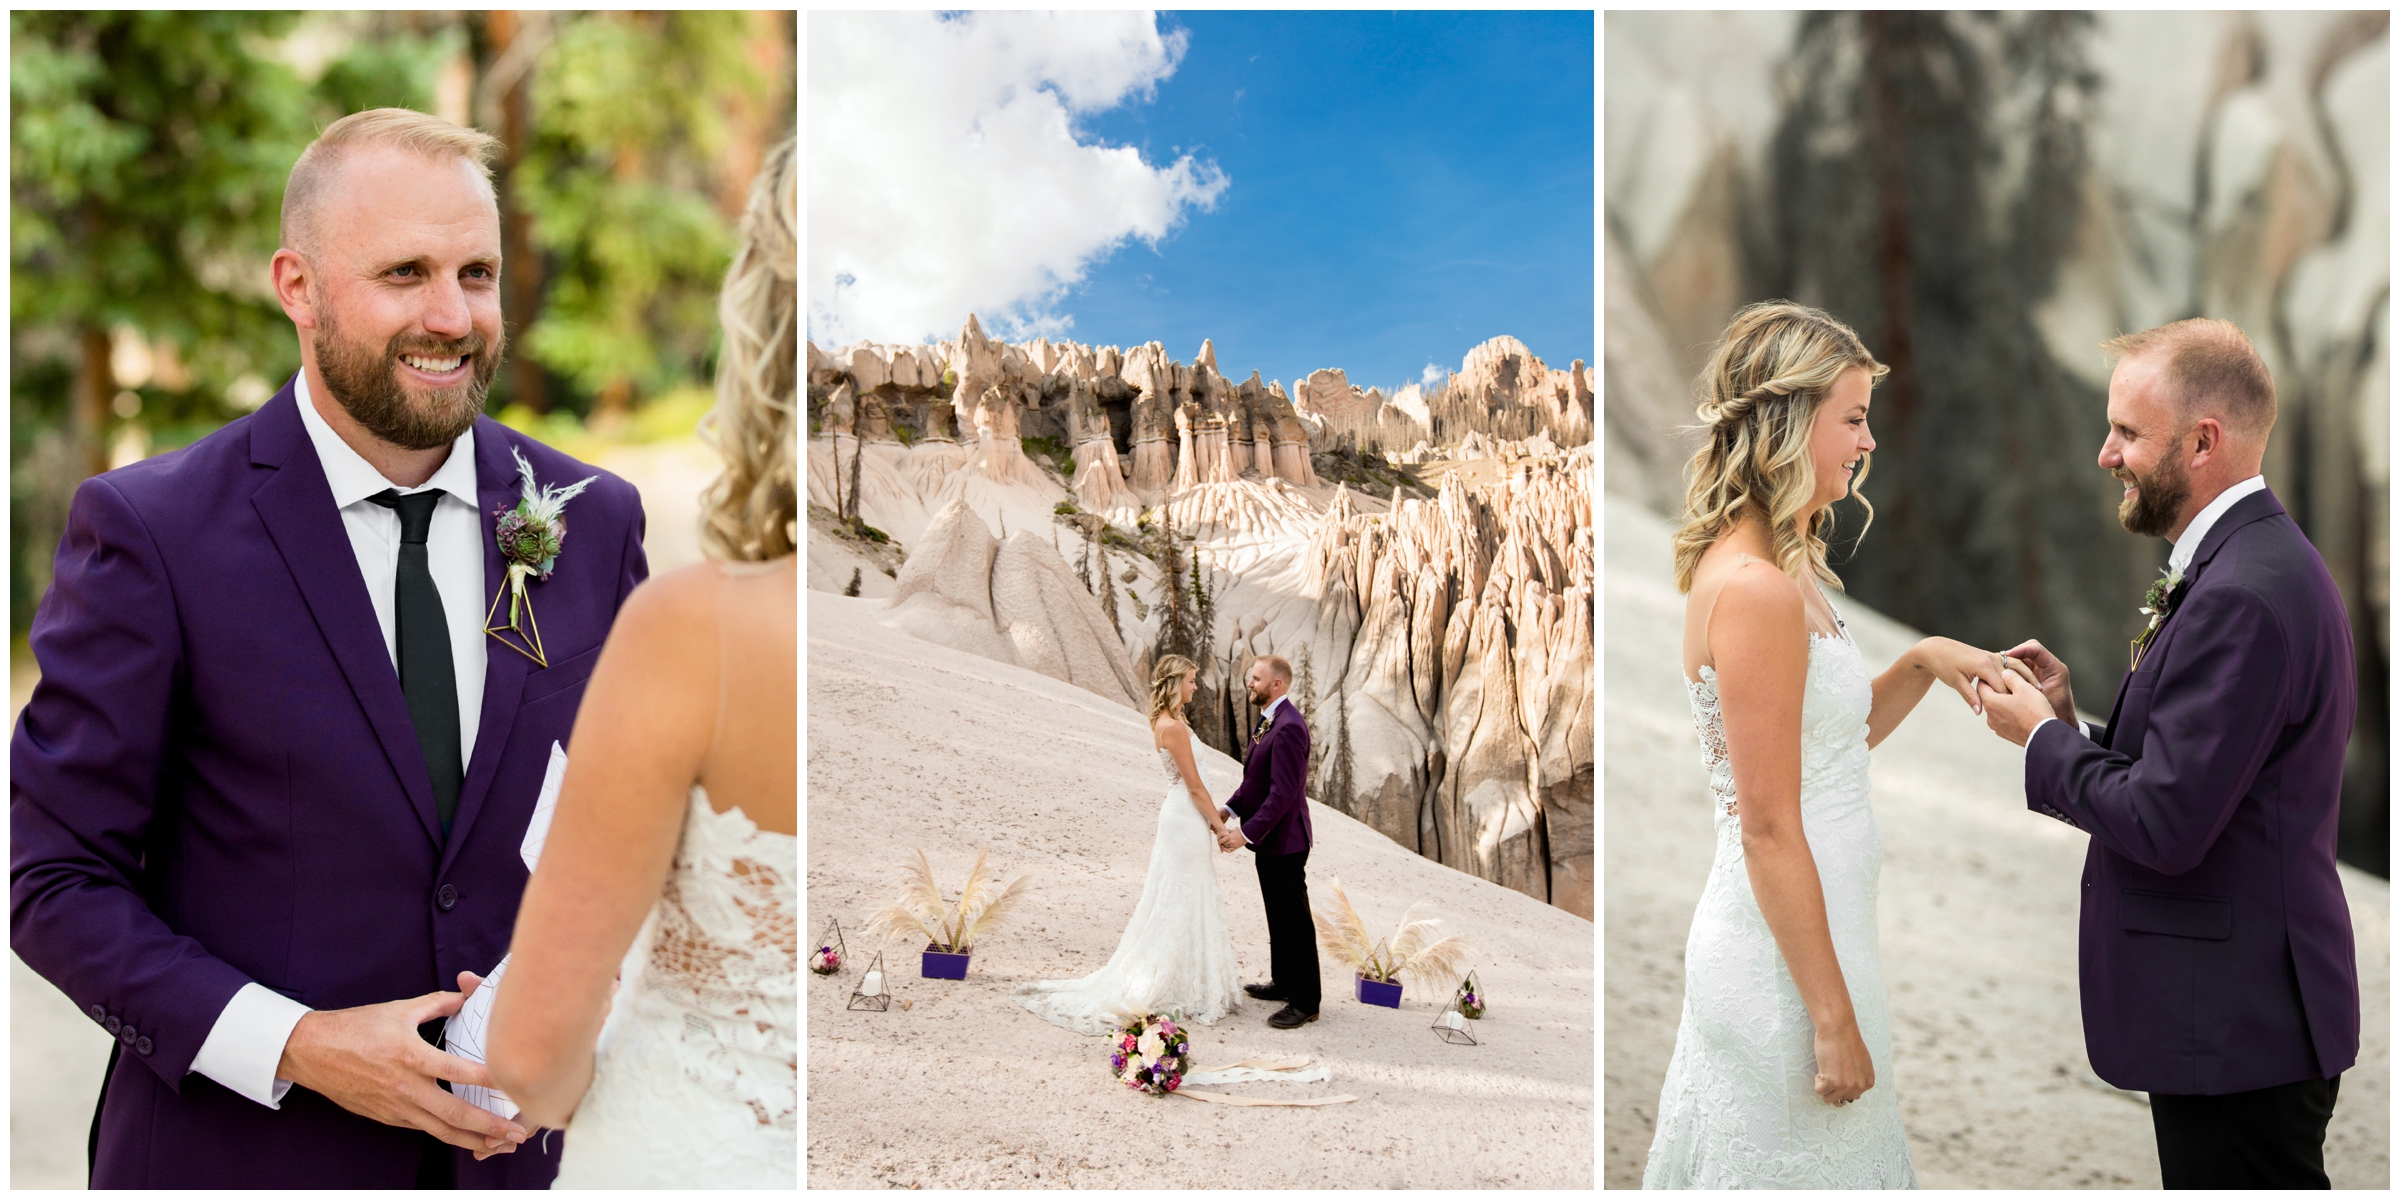 Southern Colorado mountain elopement by Denver wedding photographer Plum Pretty Photography 